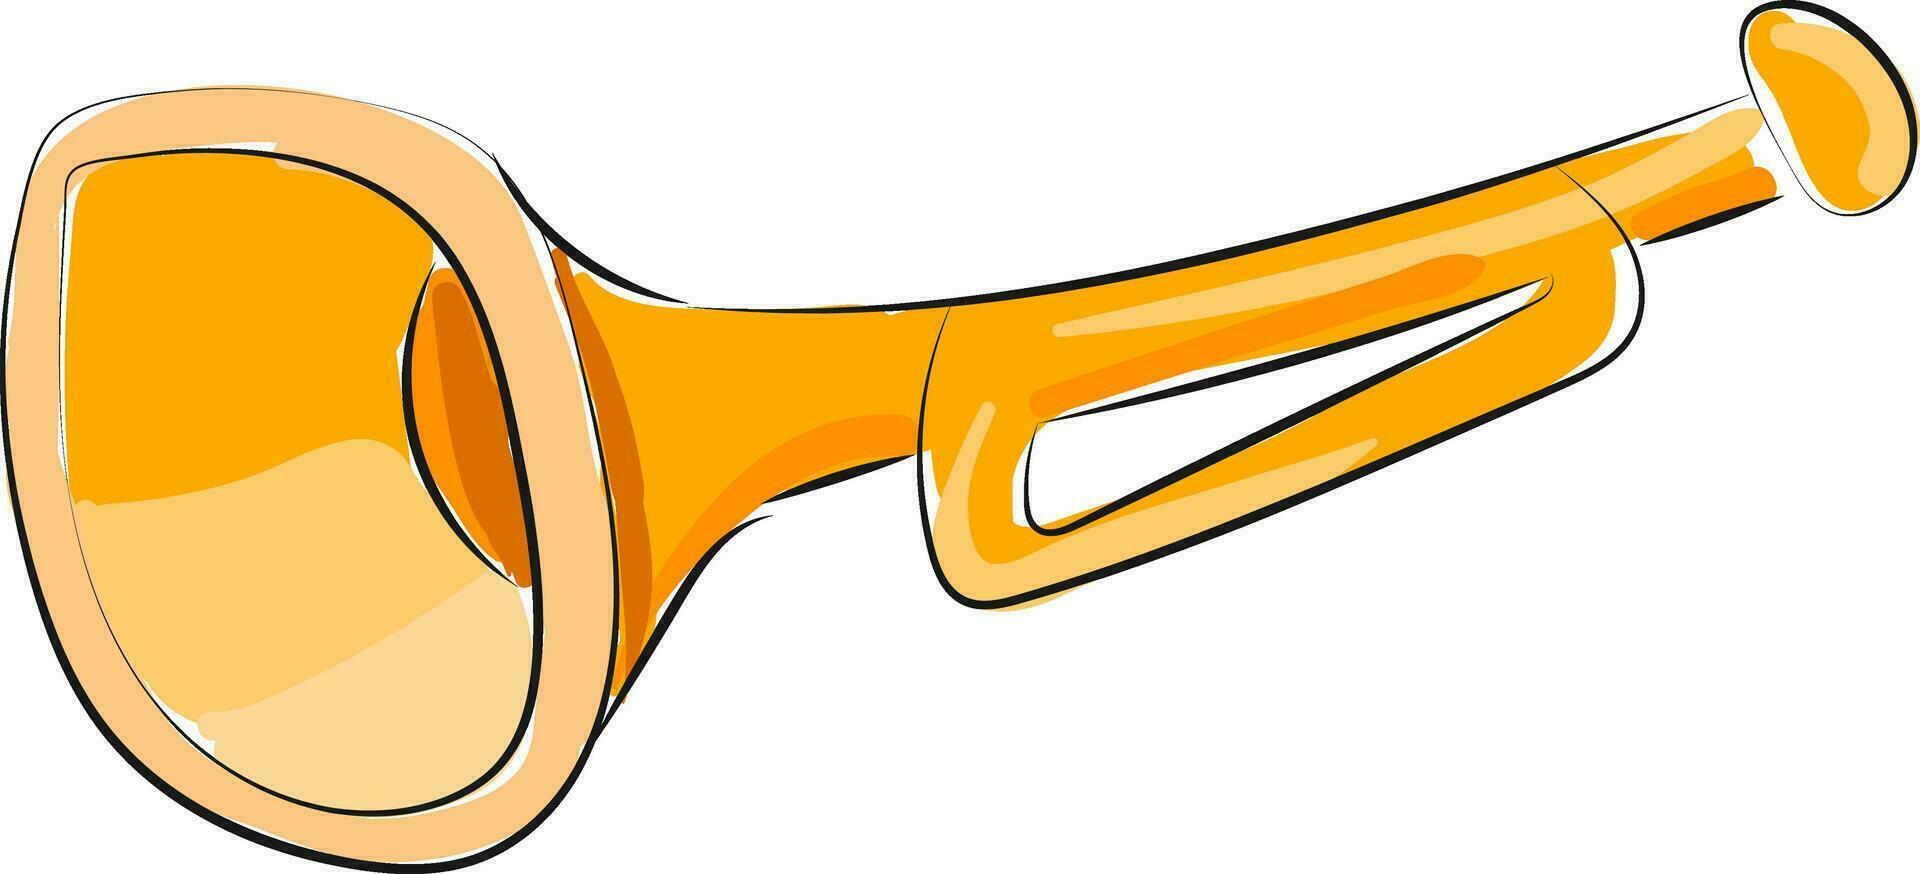 Trumpet, vector or color illustration.